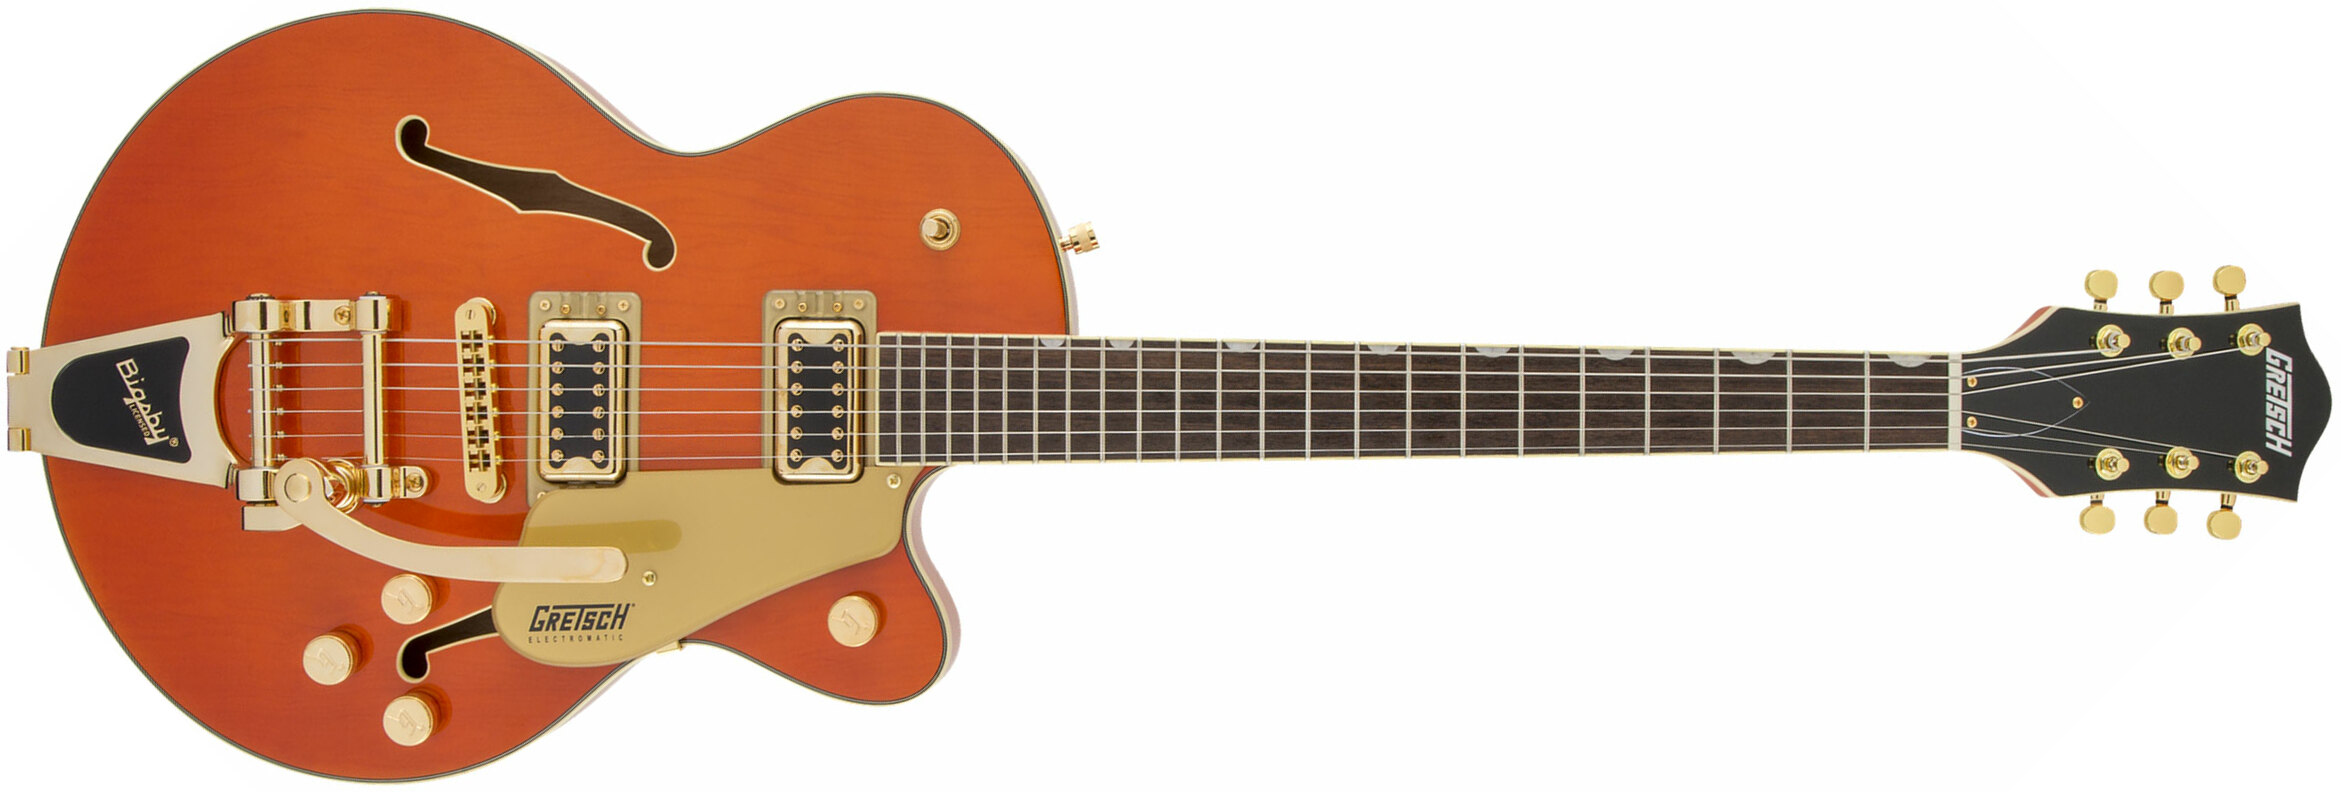 Gretsch G5655tg Electromatic Center Block Jr. Hh Bigsby Lau - Orange Stain - Semi-hollow electric guitar - Main picture